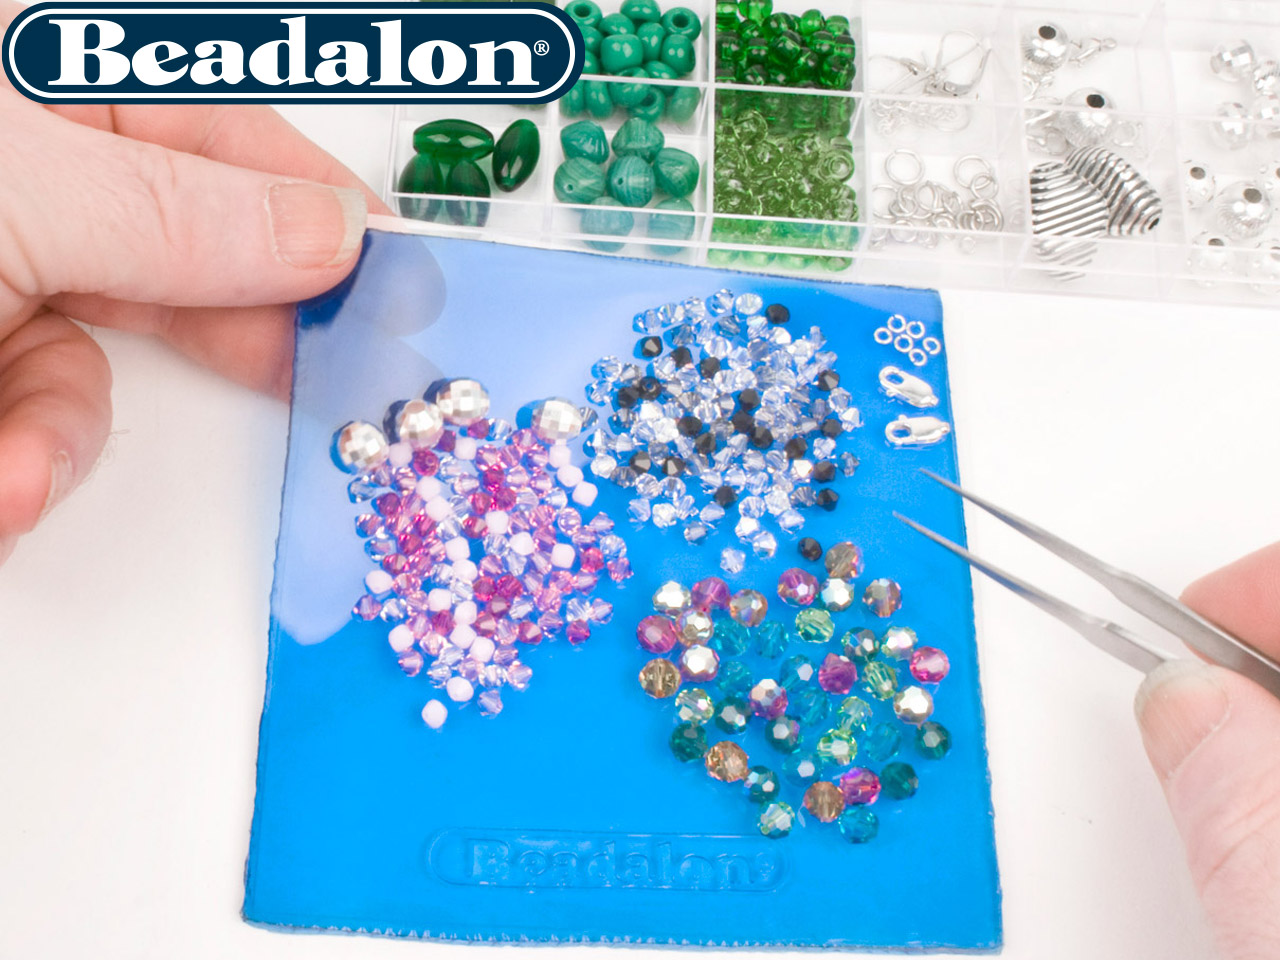 Tapis adhésif pour perles, Beadalon - Image Standard - 3